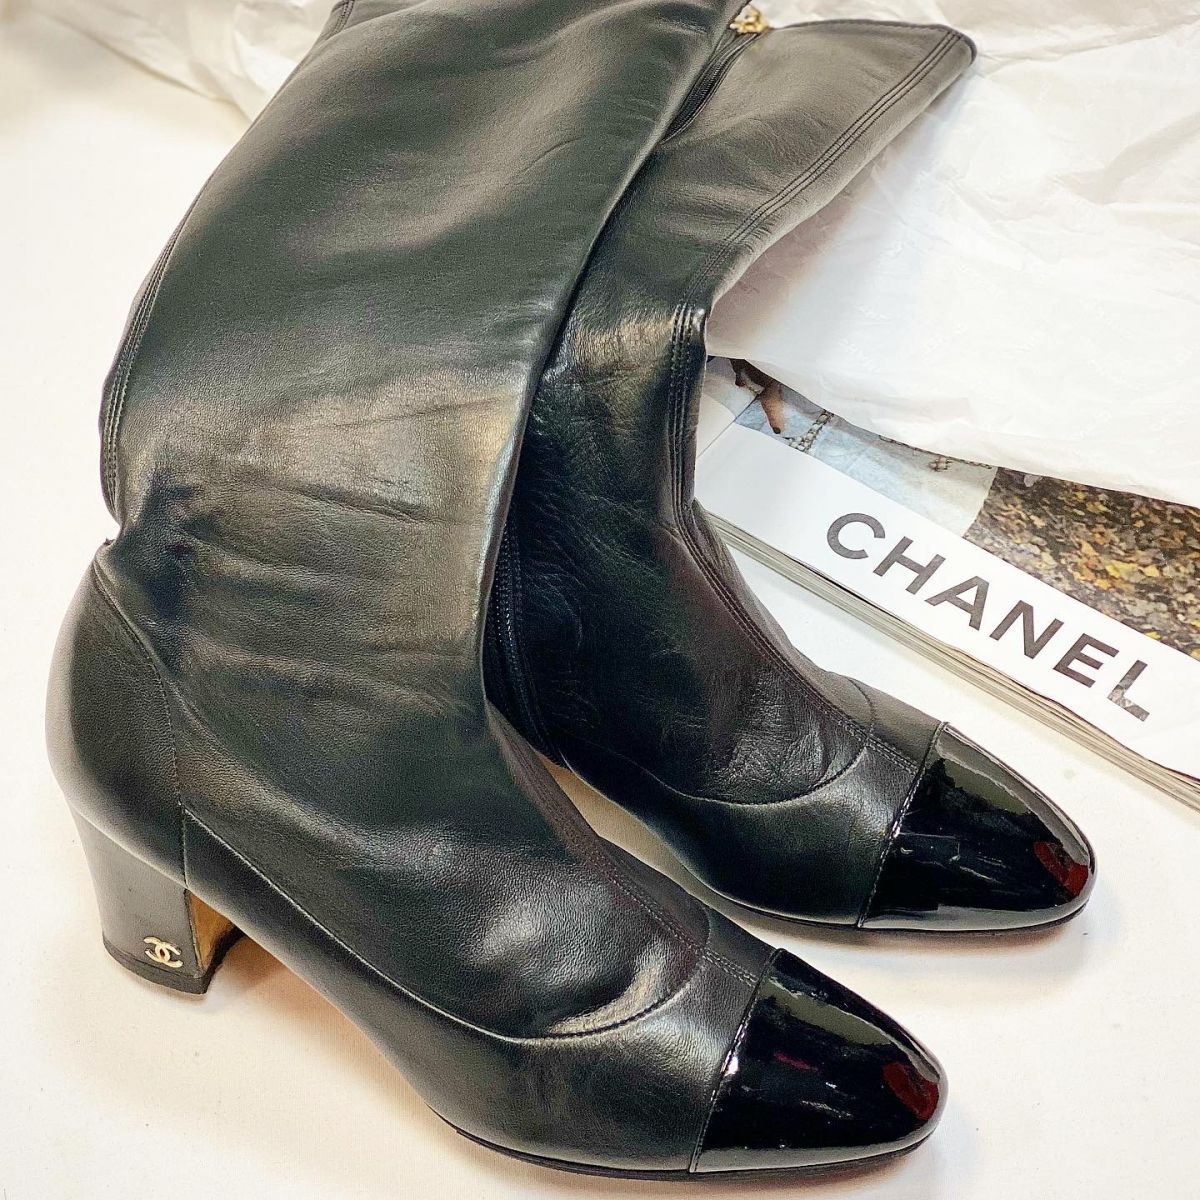 Сапоги Chanel  размер 37 цена 30 770 руб 